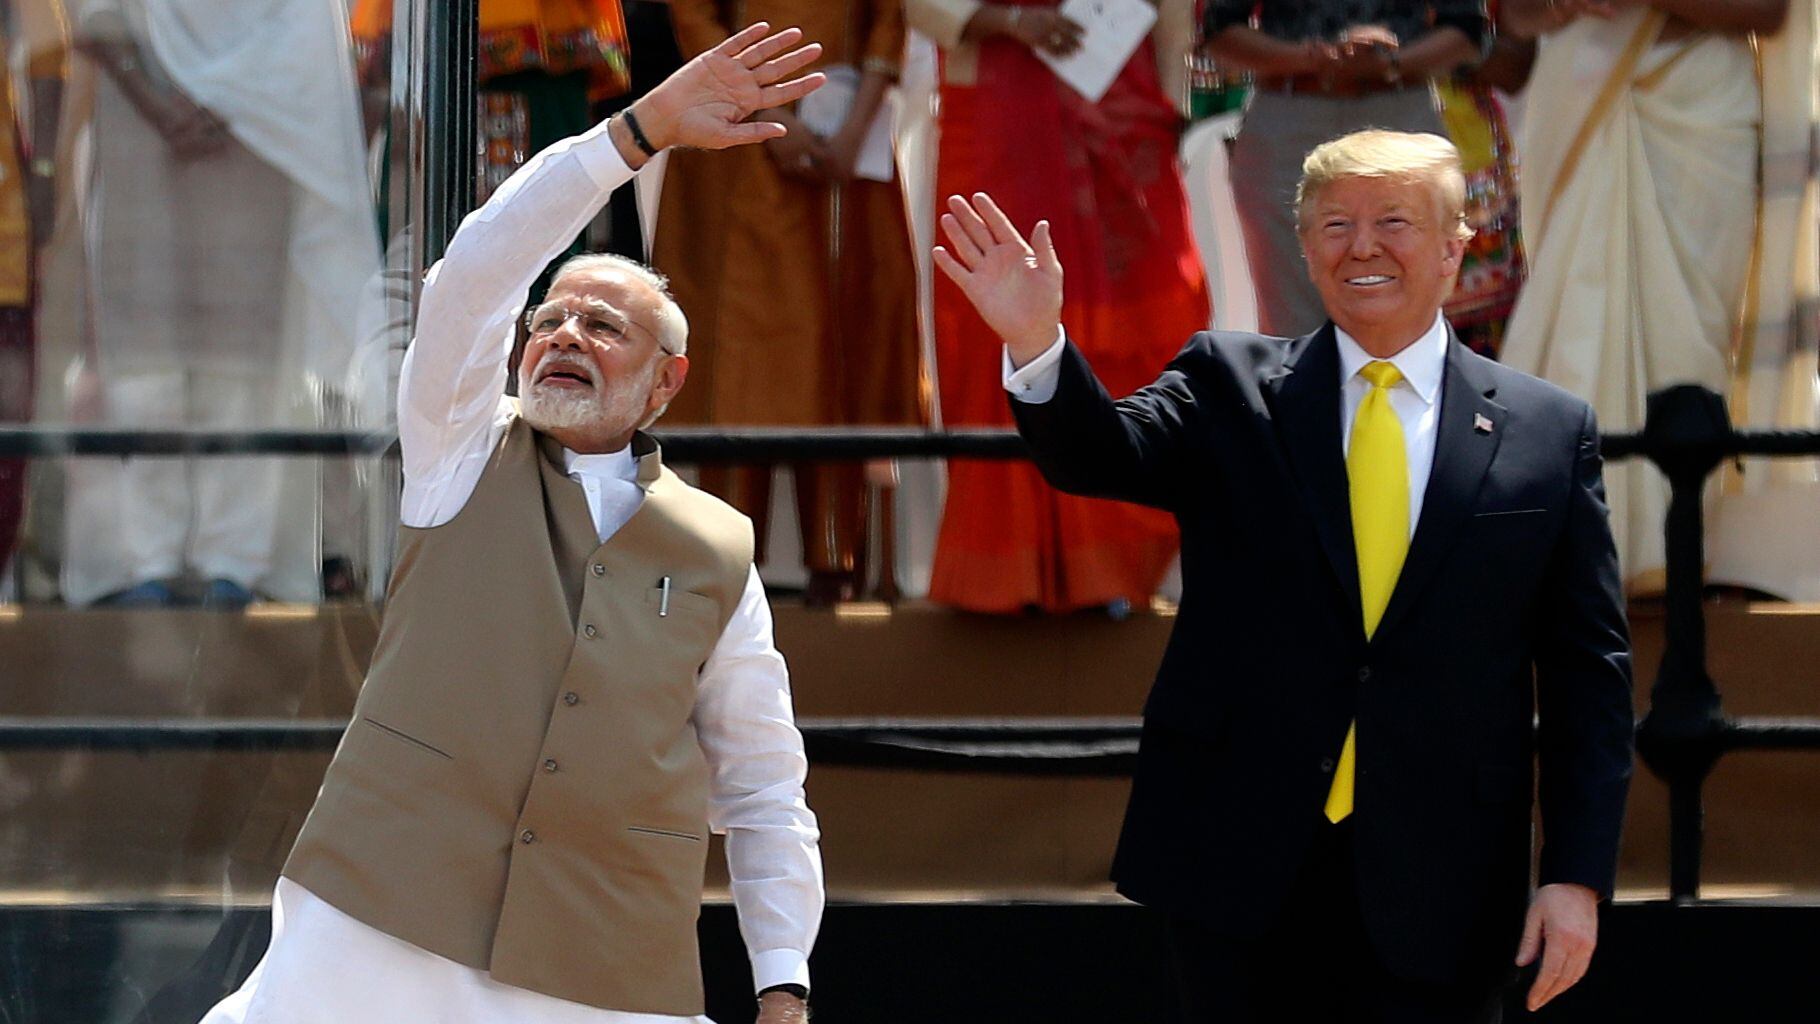 O primeiro-ministro indiano Modi acena ao lado de Trump, nestasegunda-feira no estádio Ahmedabad.